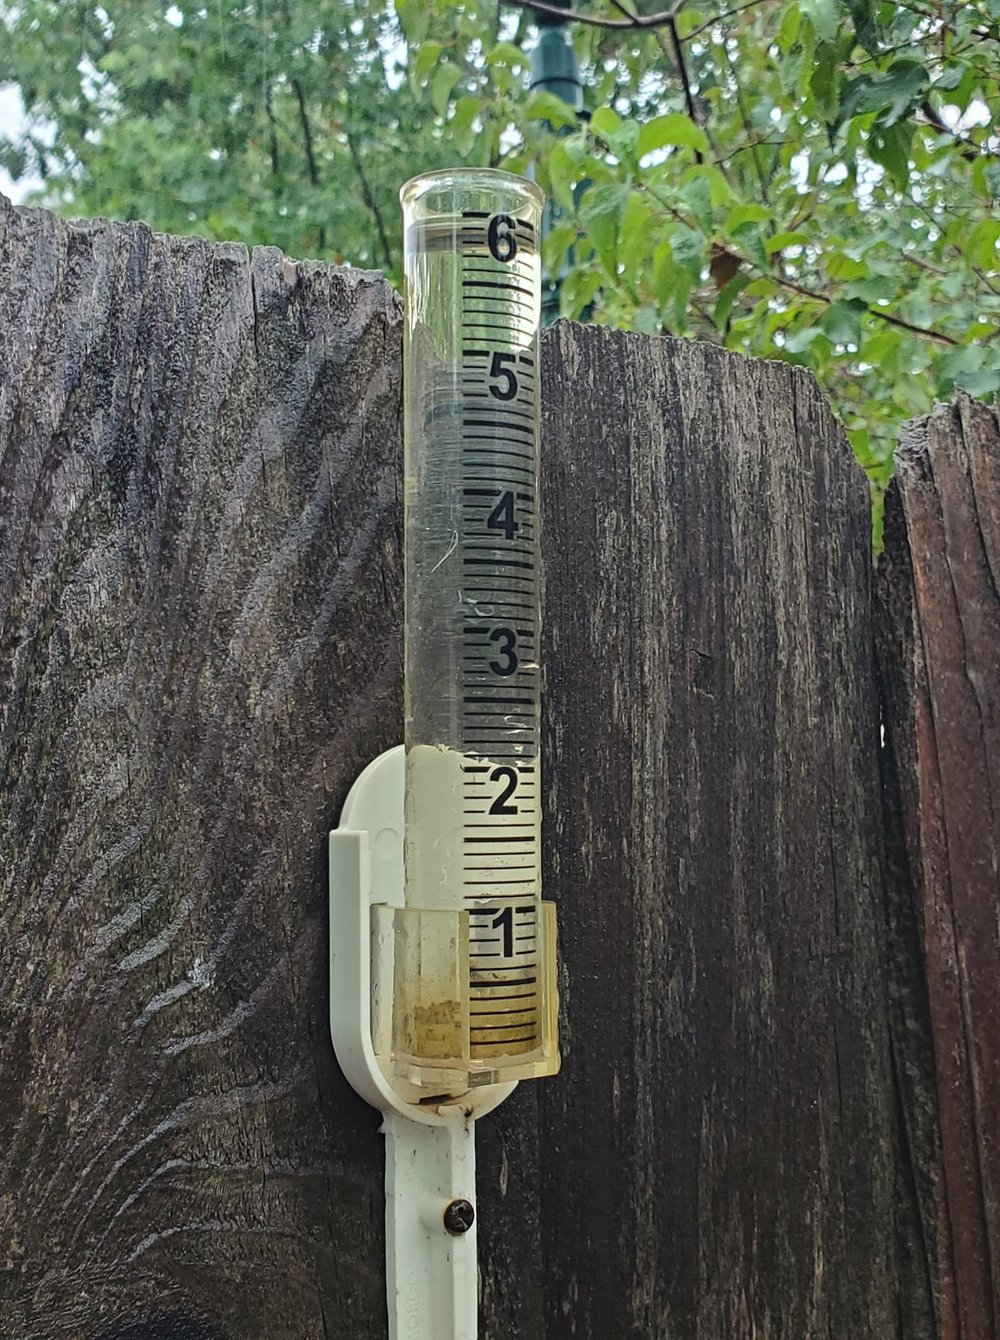  Nearby resident,  Jesse Tate’s  rain gauge tells the rainfall story. 